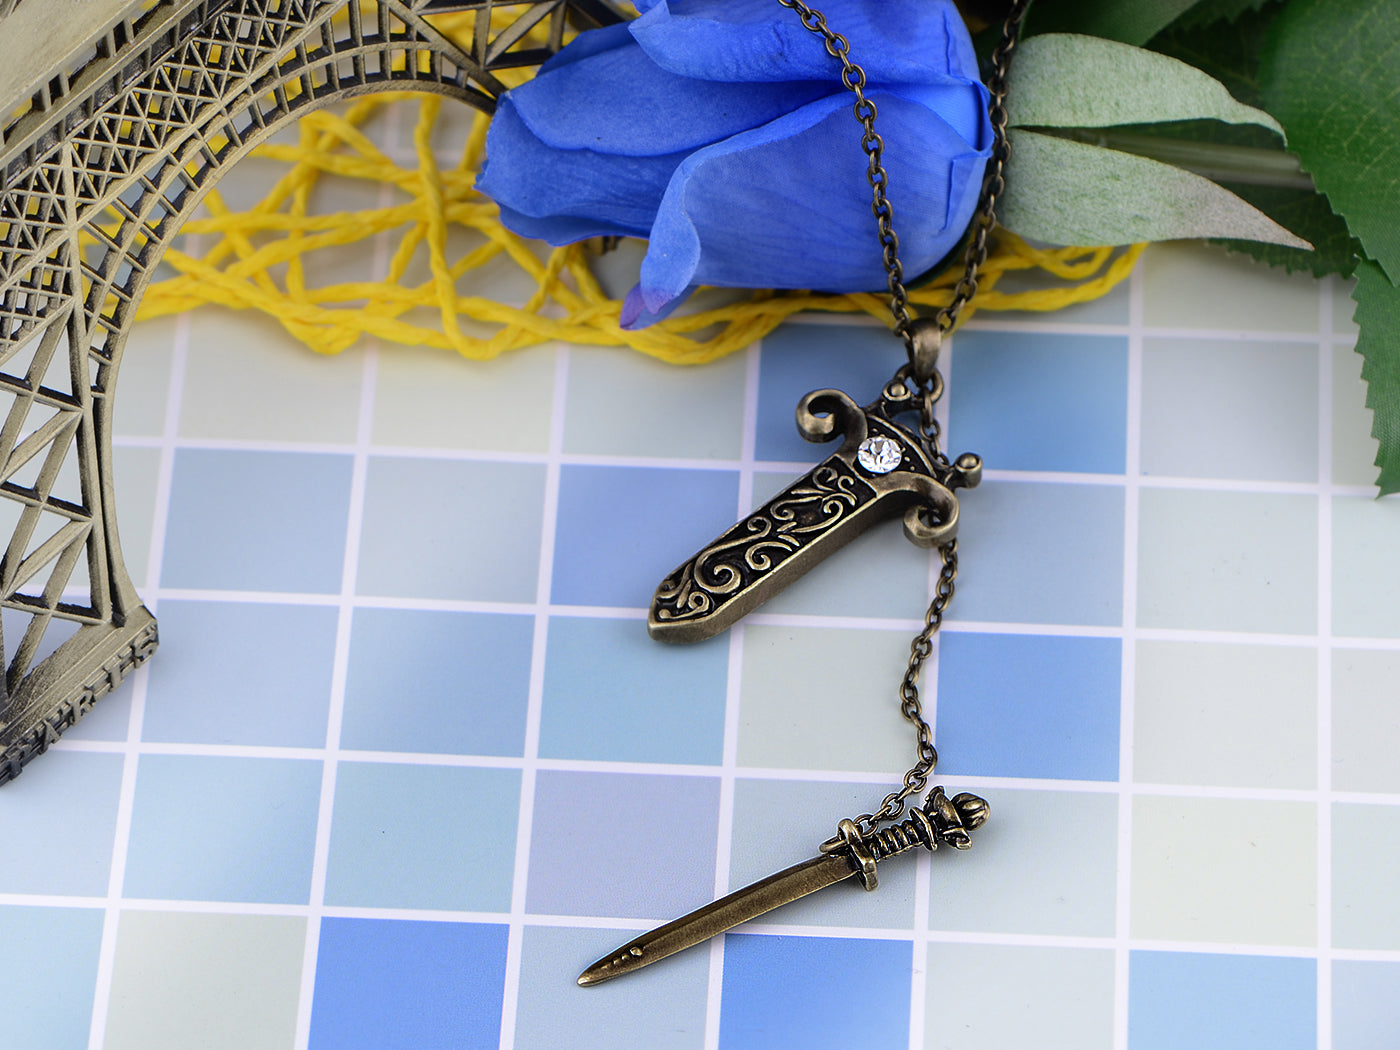 Antique Fantasy Medieval Renaissance Removable Scabbard Rune Sword Dagger Pendant Necklace